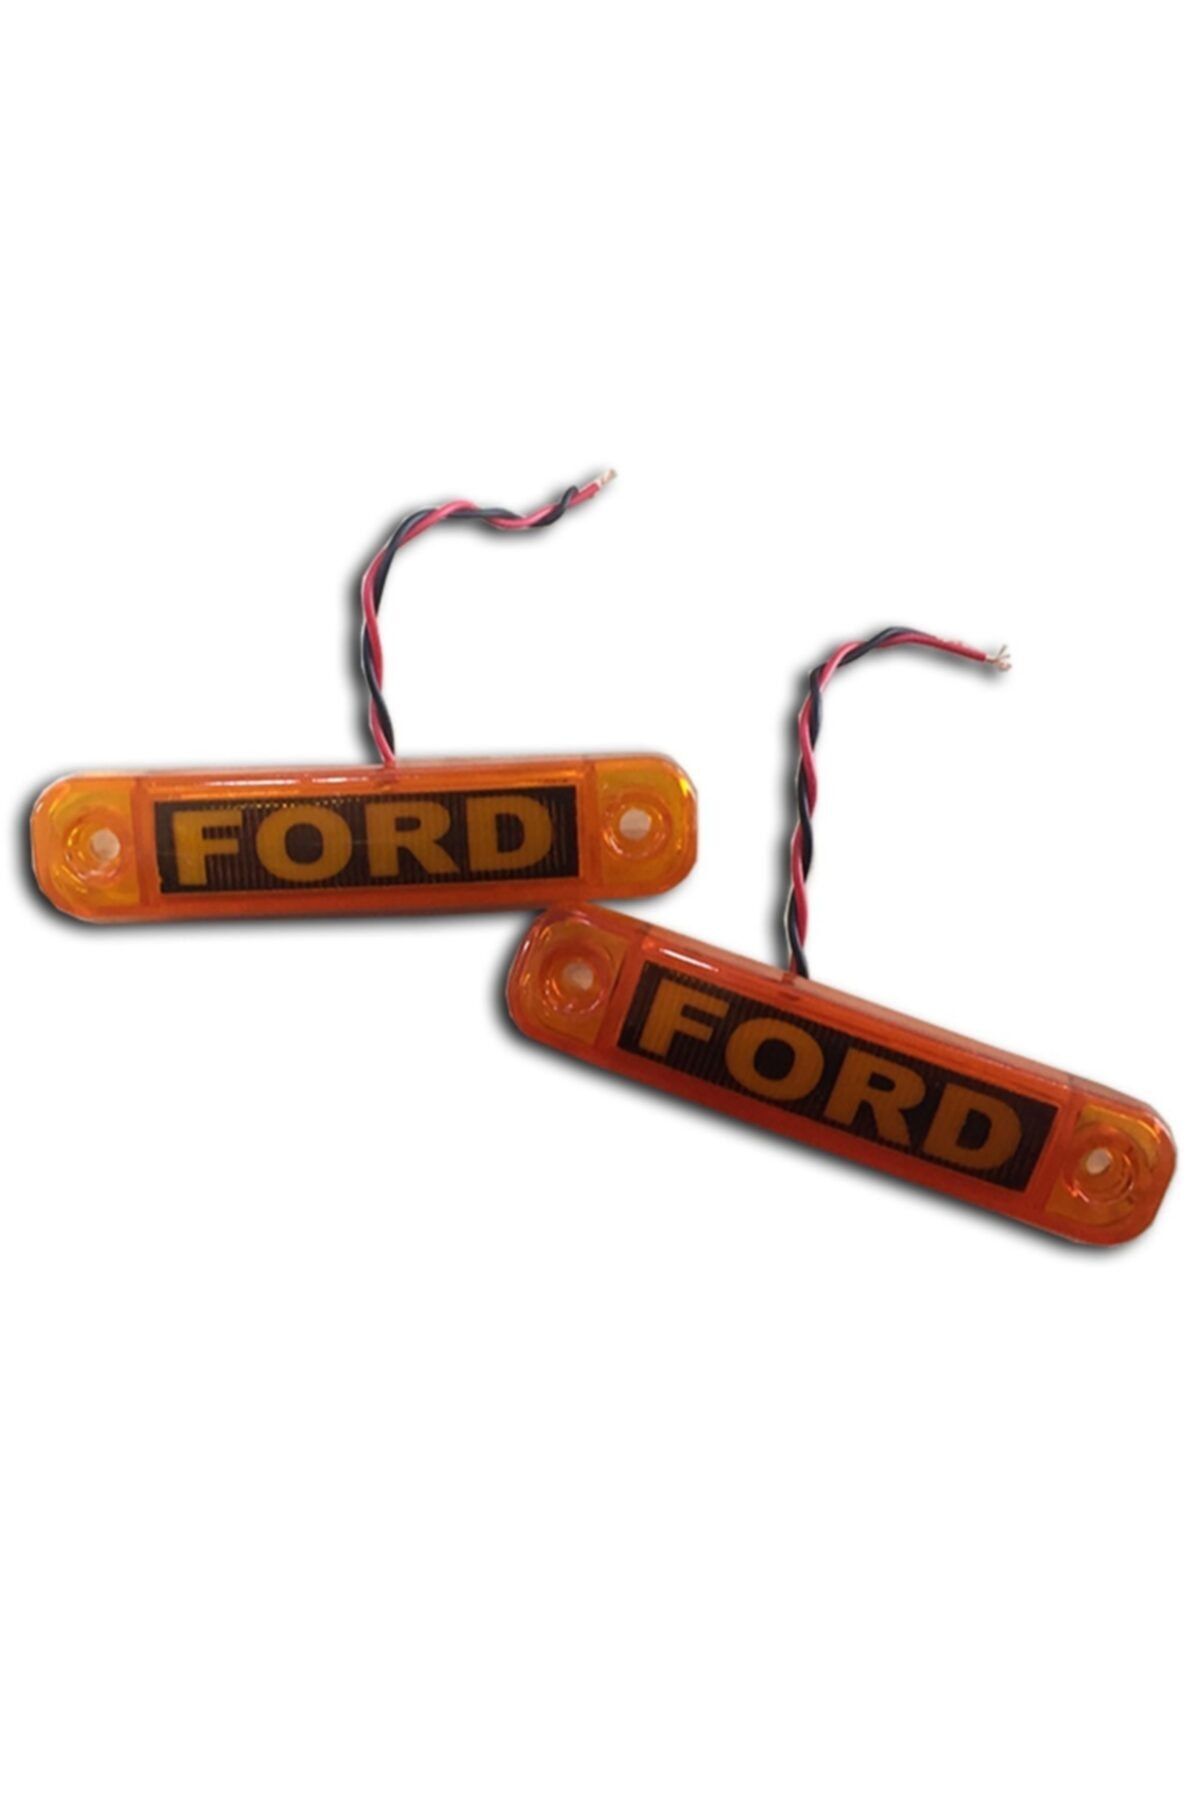 AHMET OTOMOTİV Marka Yazılı Parmak Led Ford Sarı 12v-24v